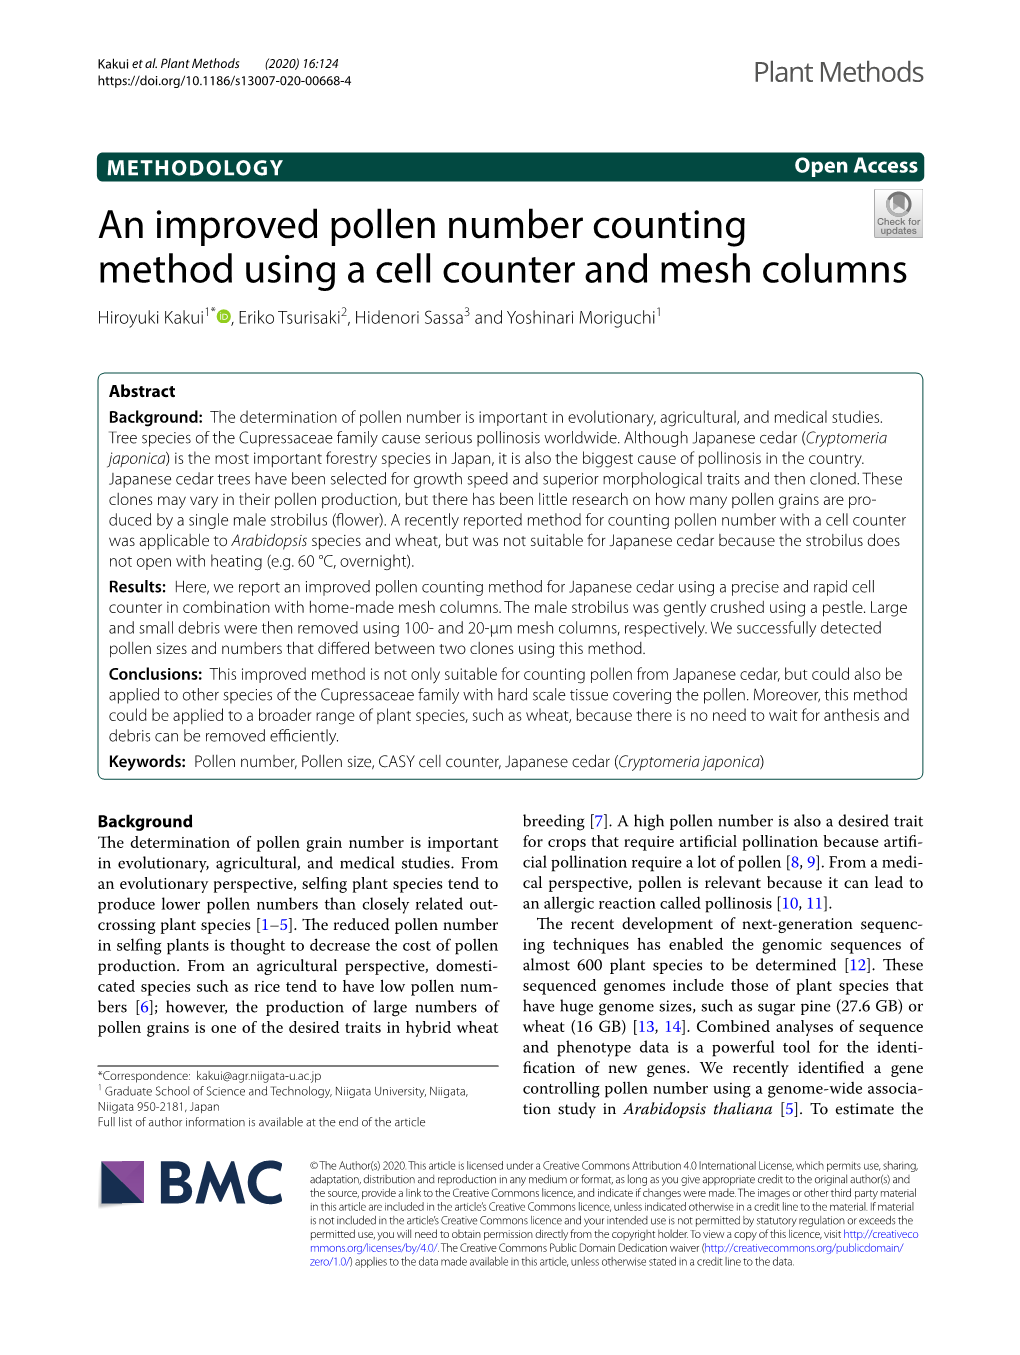 An Improved Pollen Number Counting Method Using a Cell Counter and Mesh Columns Hiroyuki Kakui1* , Eriko Tsurisaki2, Hidenori Sassa3 and Yoshinari Moriguchi1